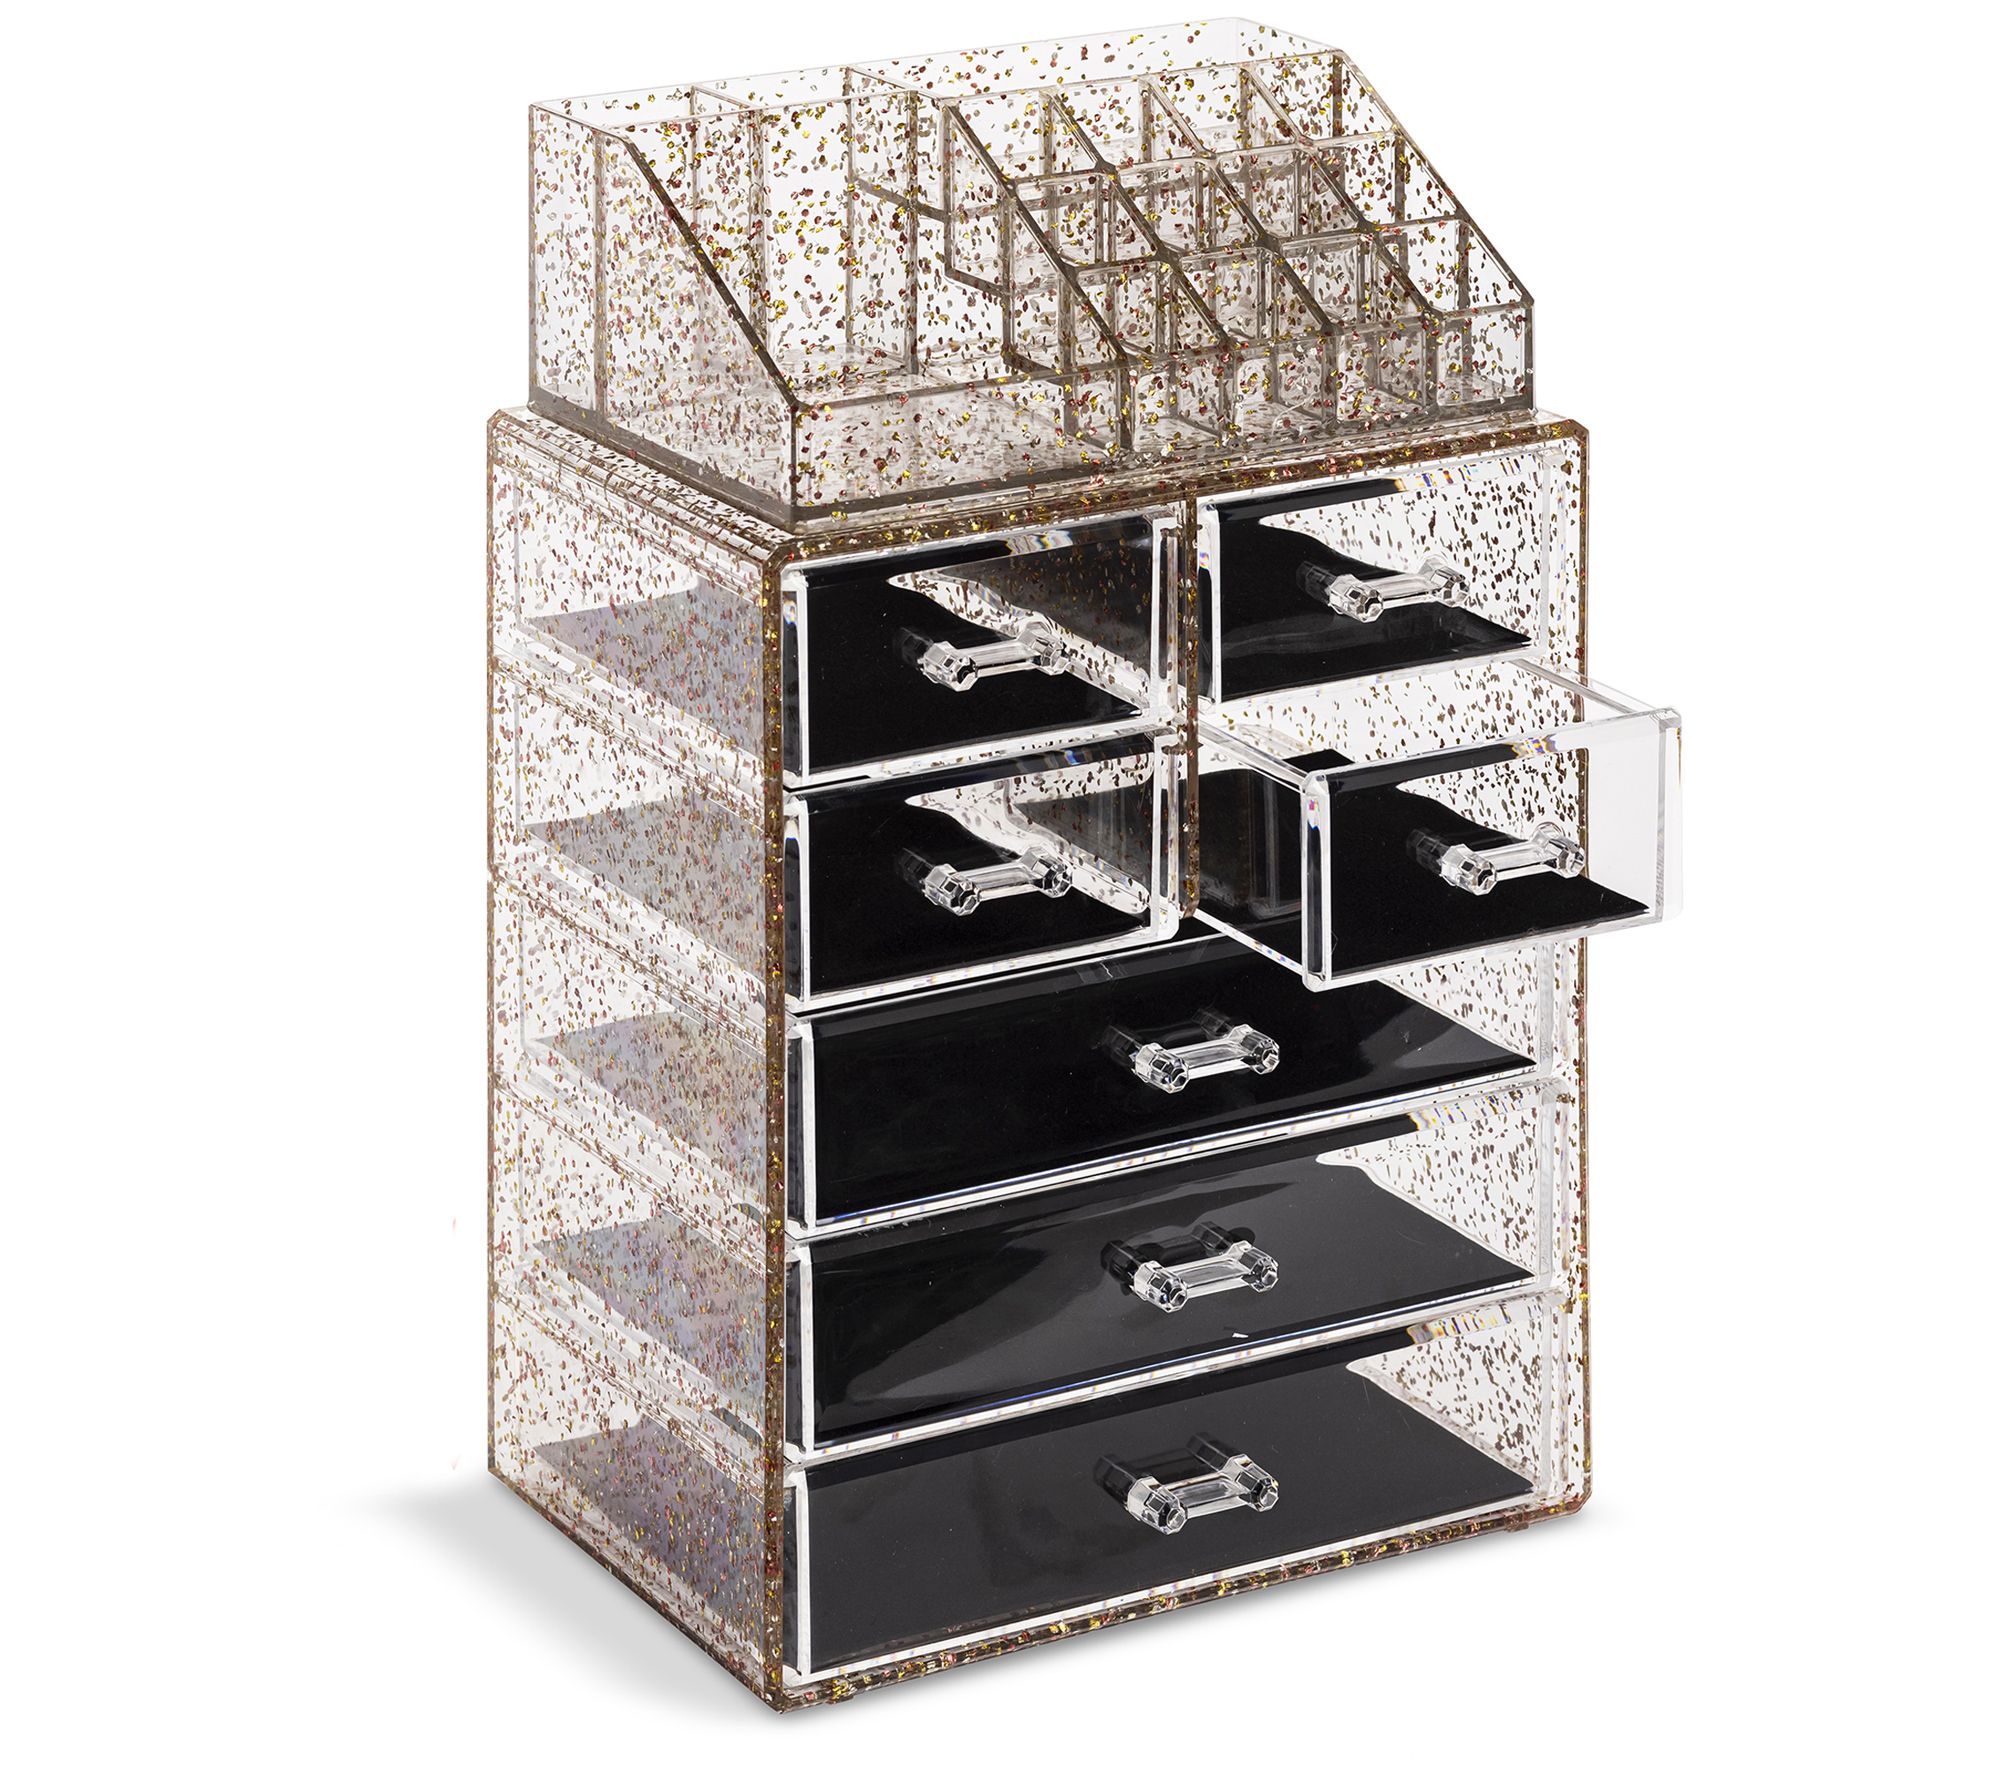 UNIQ acrylic Jewelry box with 3 drawers - organizer storage for earring,  necklaces, bracelets, watches etc.